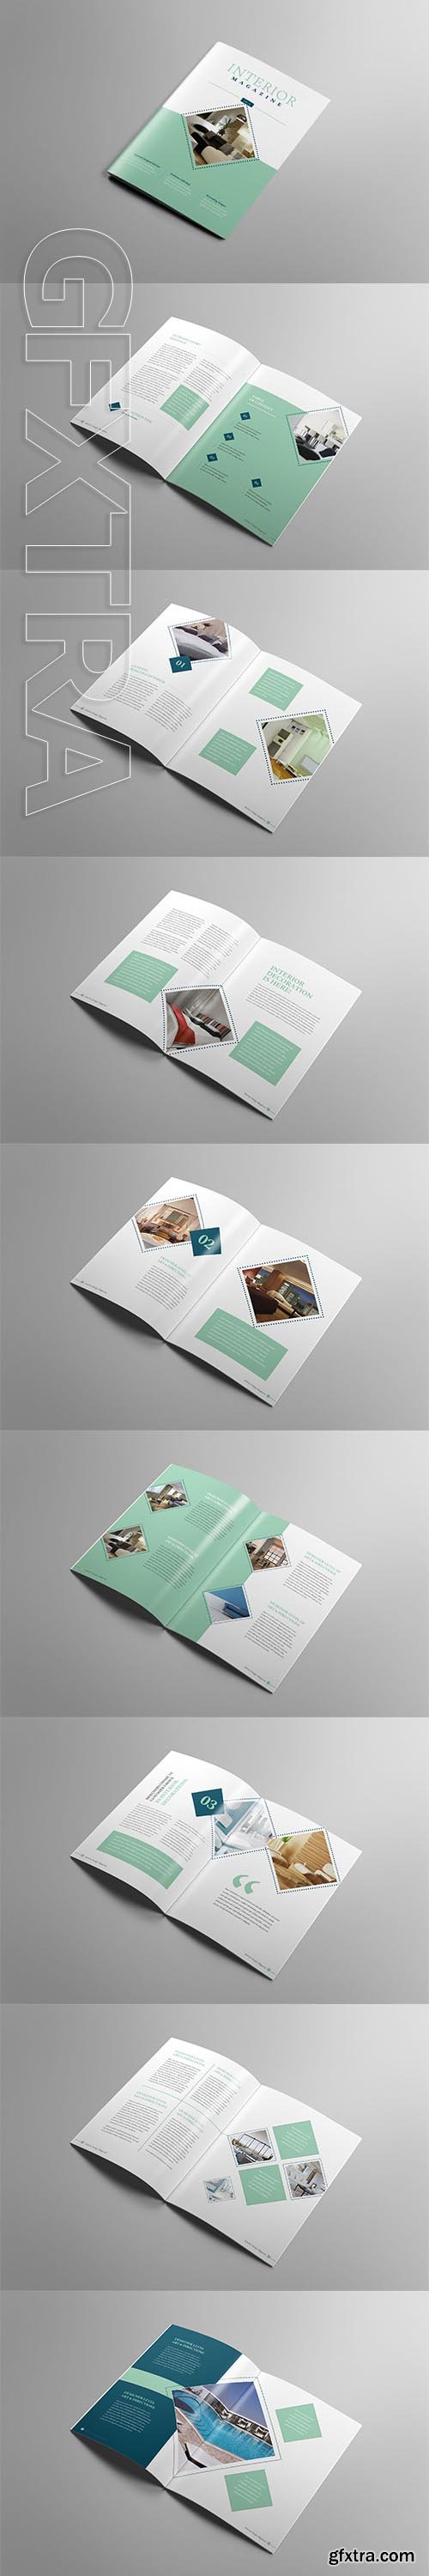 CreativeMarket - Interior Design Magazine Lookbook 3197641